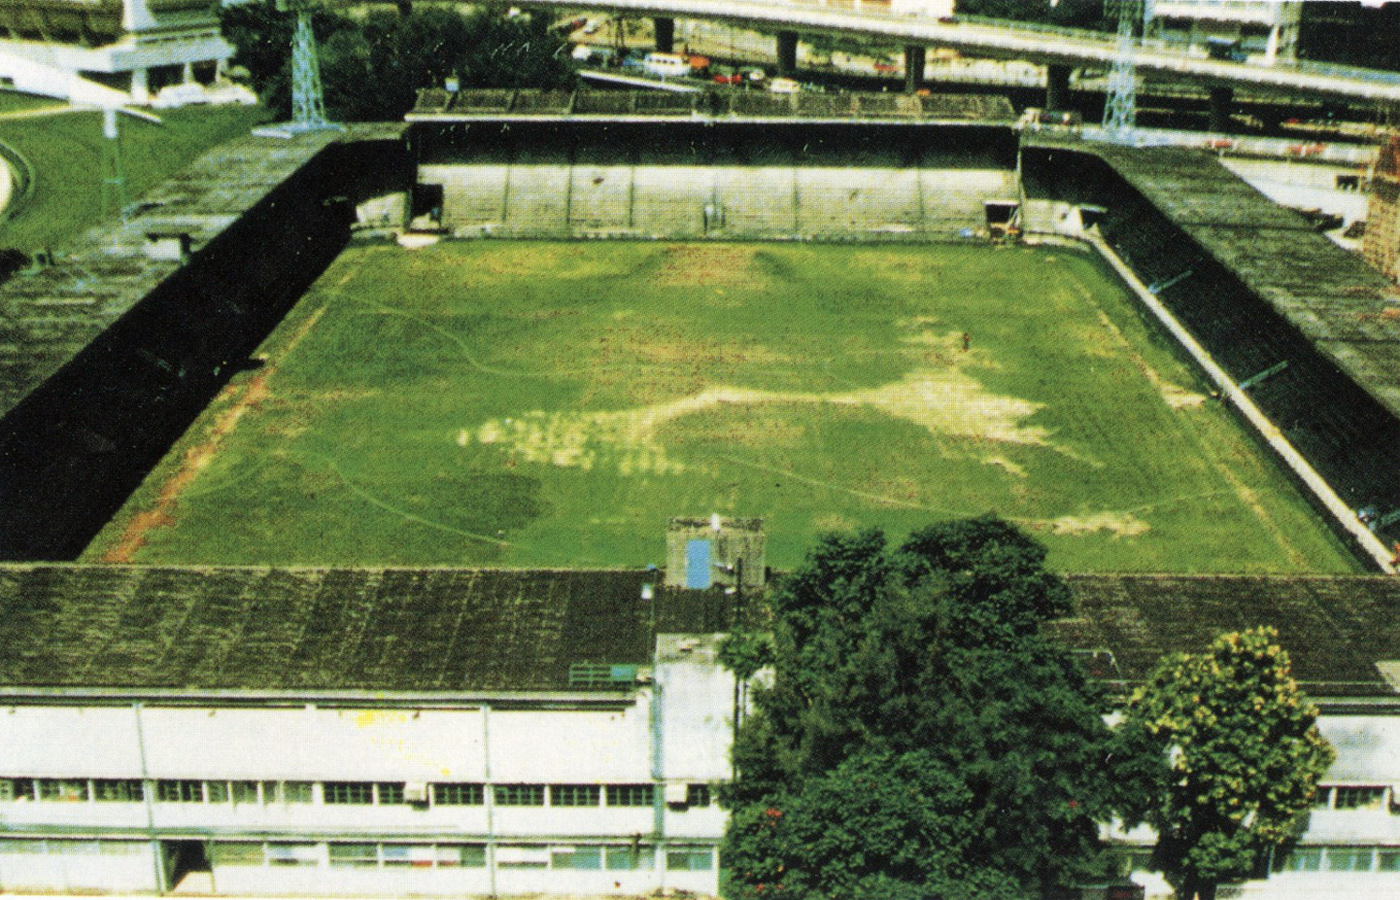 1981 and earlier - HK Football Stadium